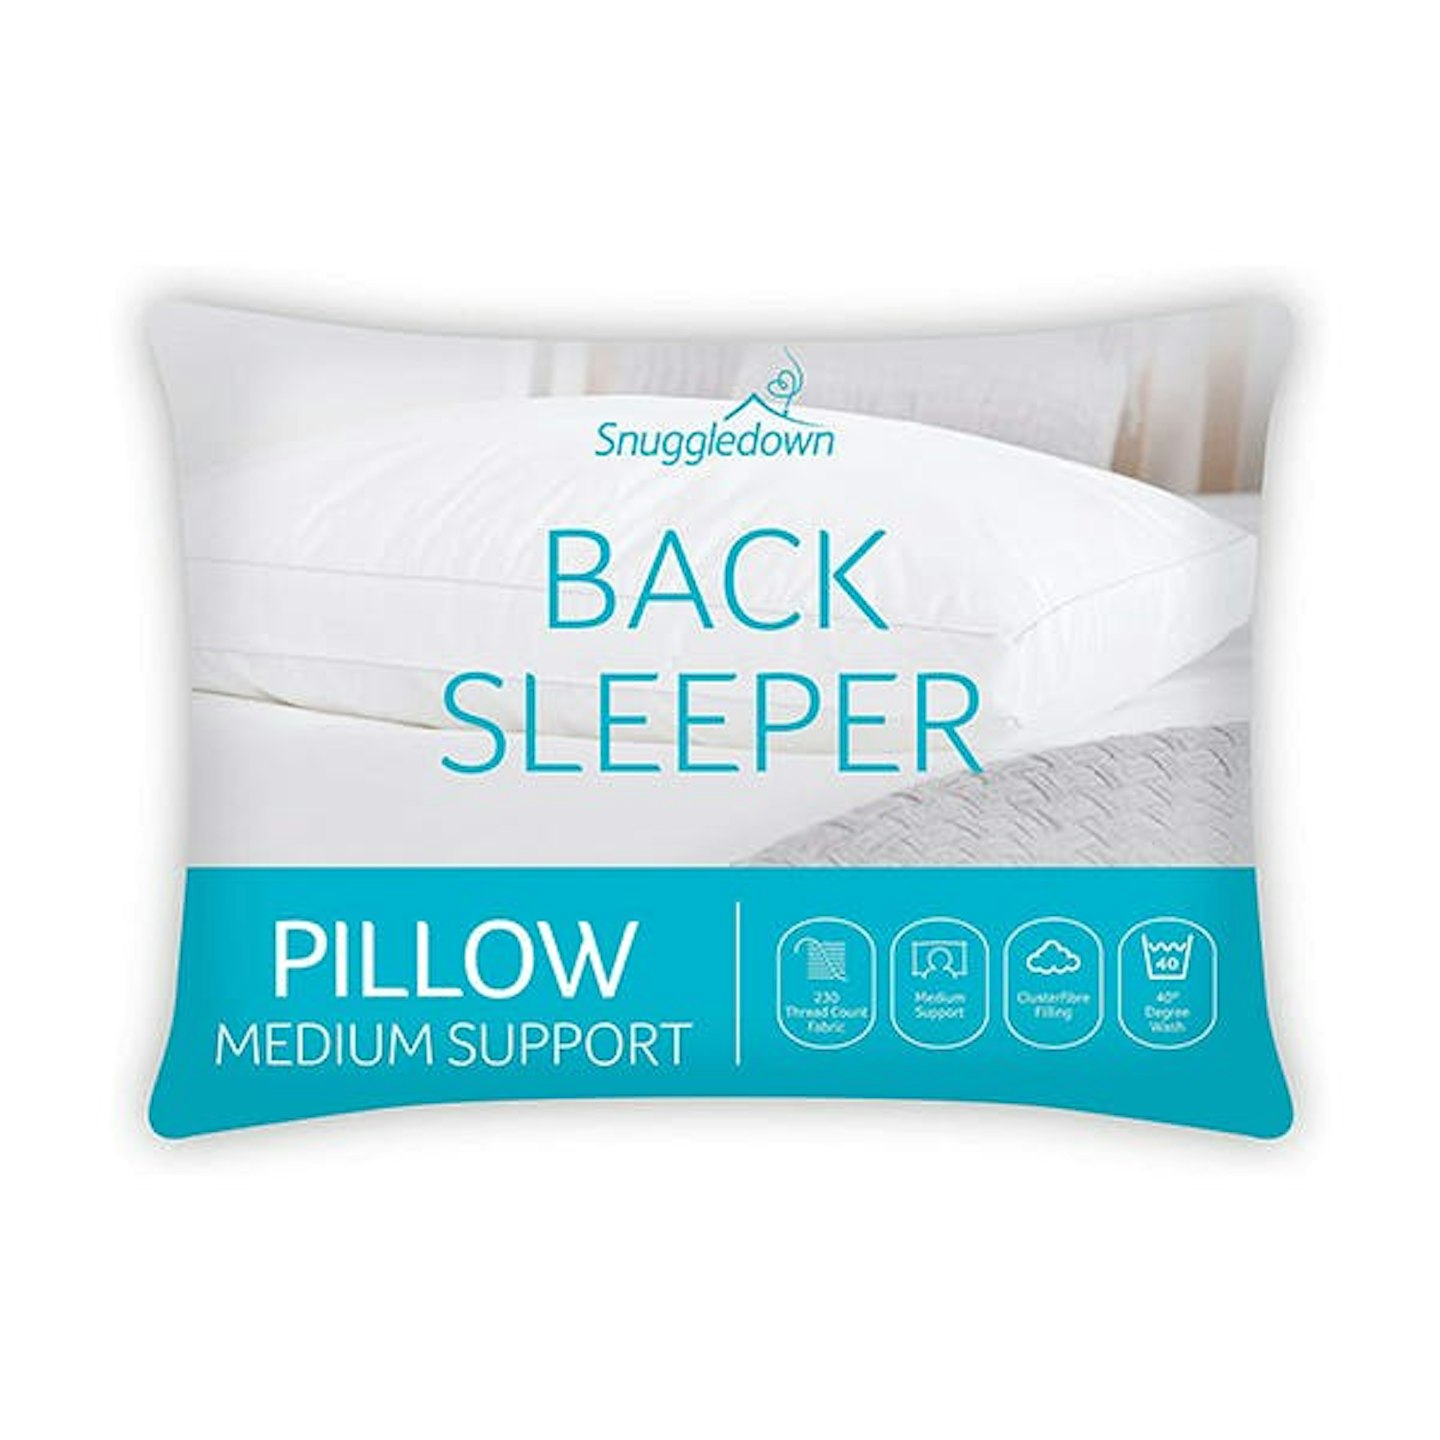 Snuggledown Back Sleeper Pillow